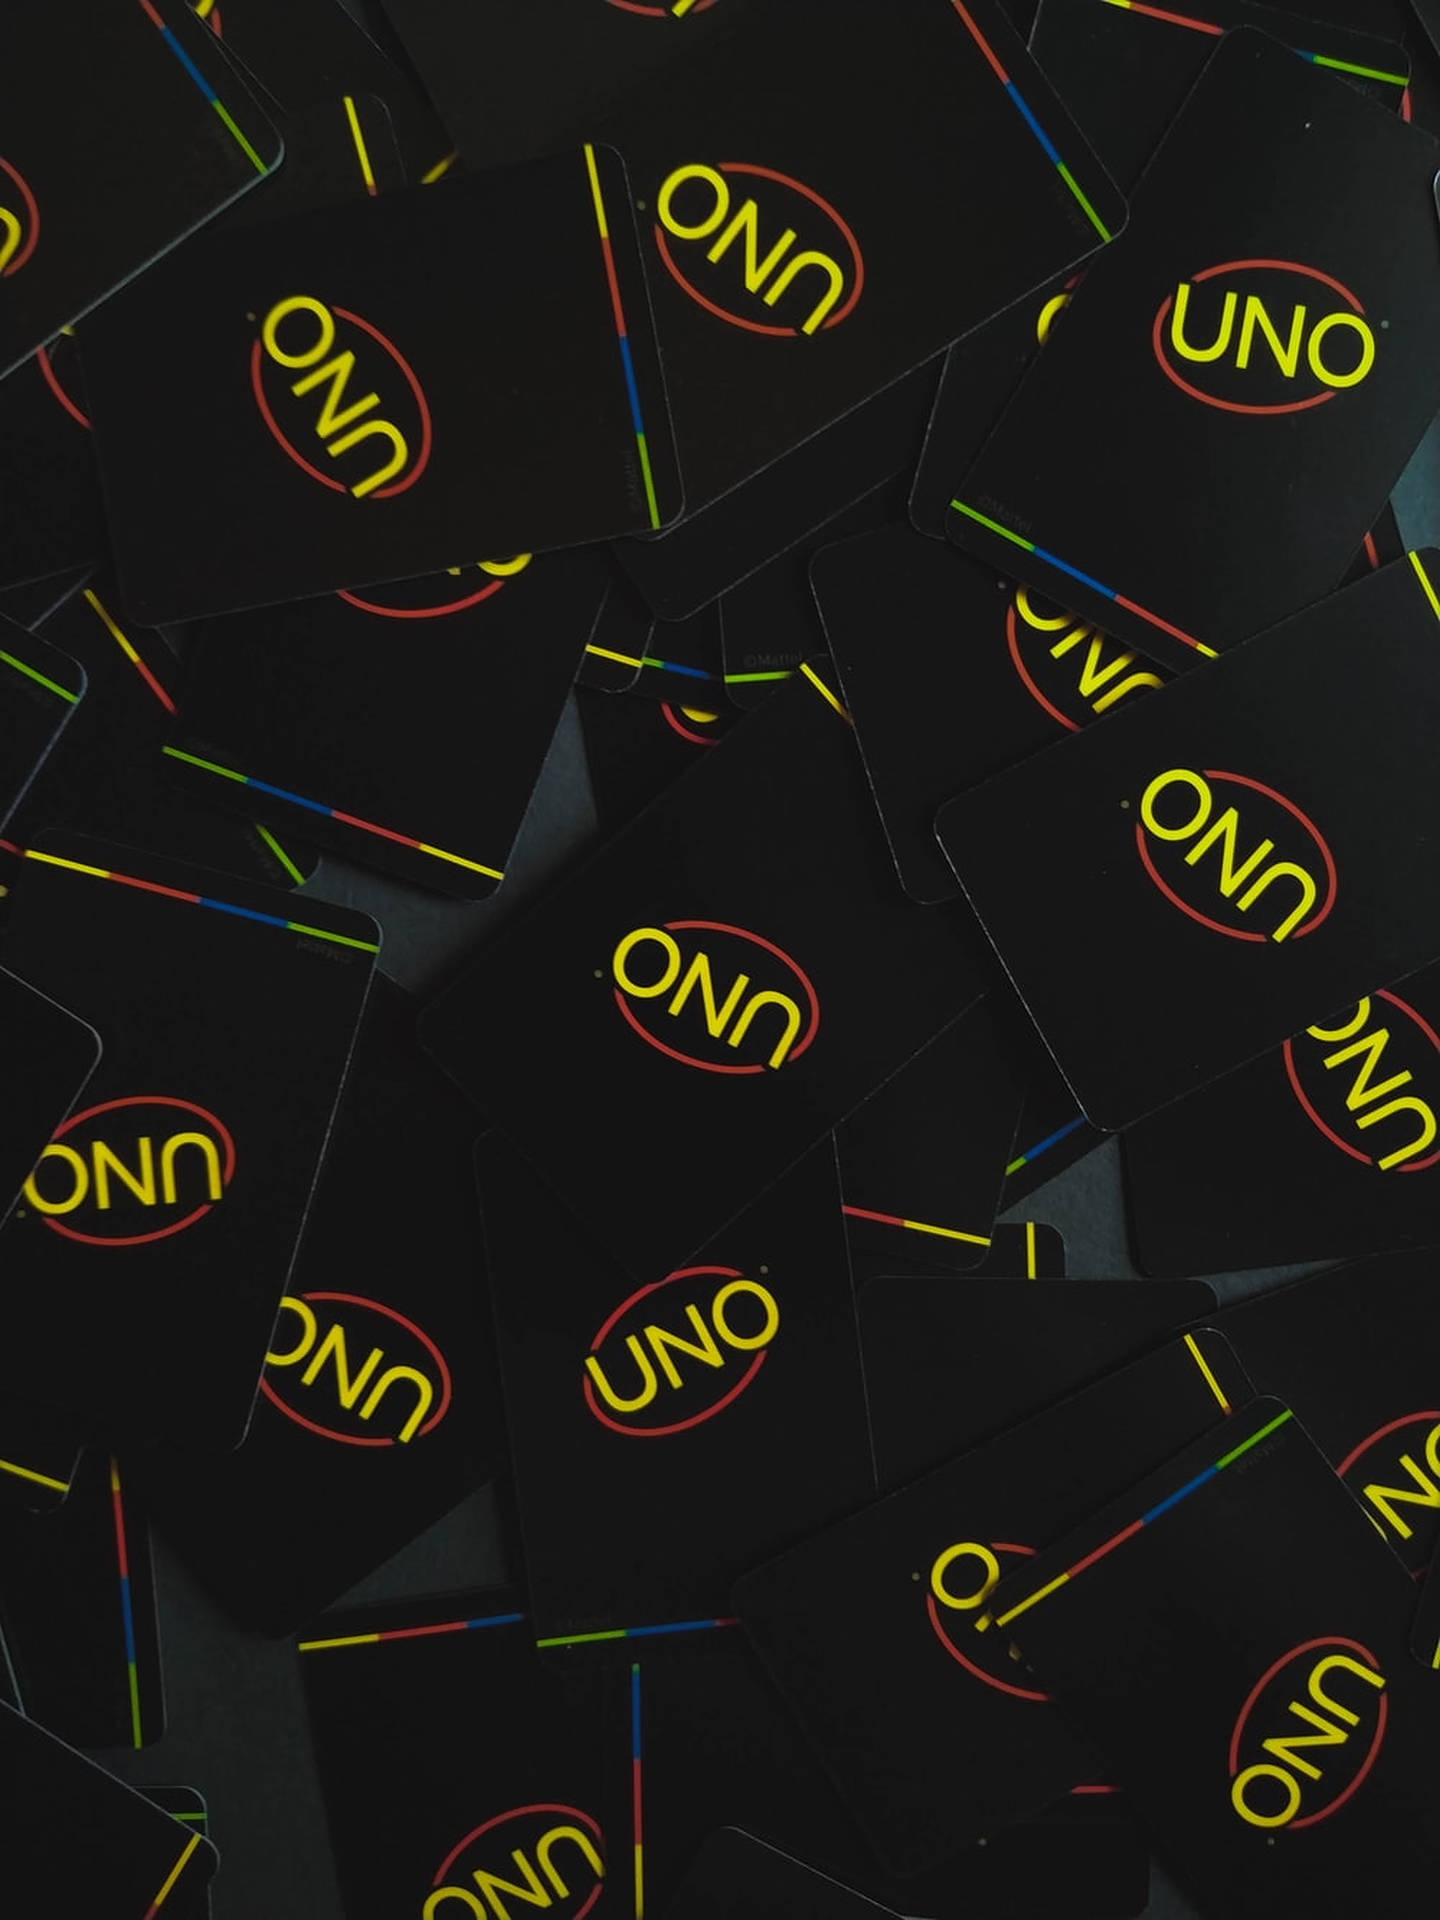 A Minimalist Design Of An Uno Card Deck